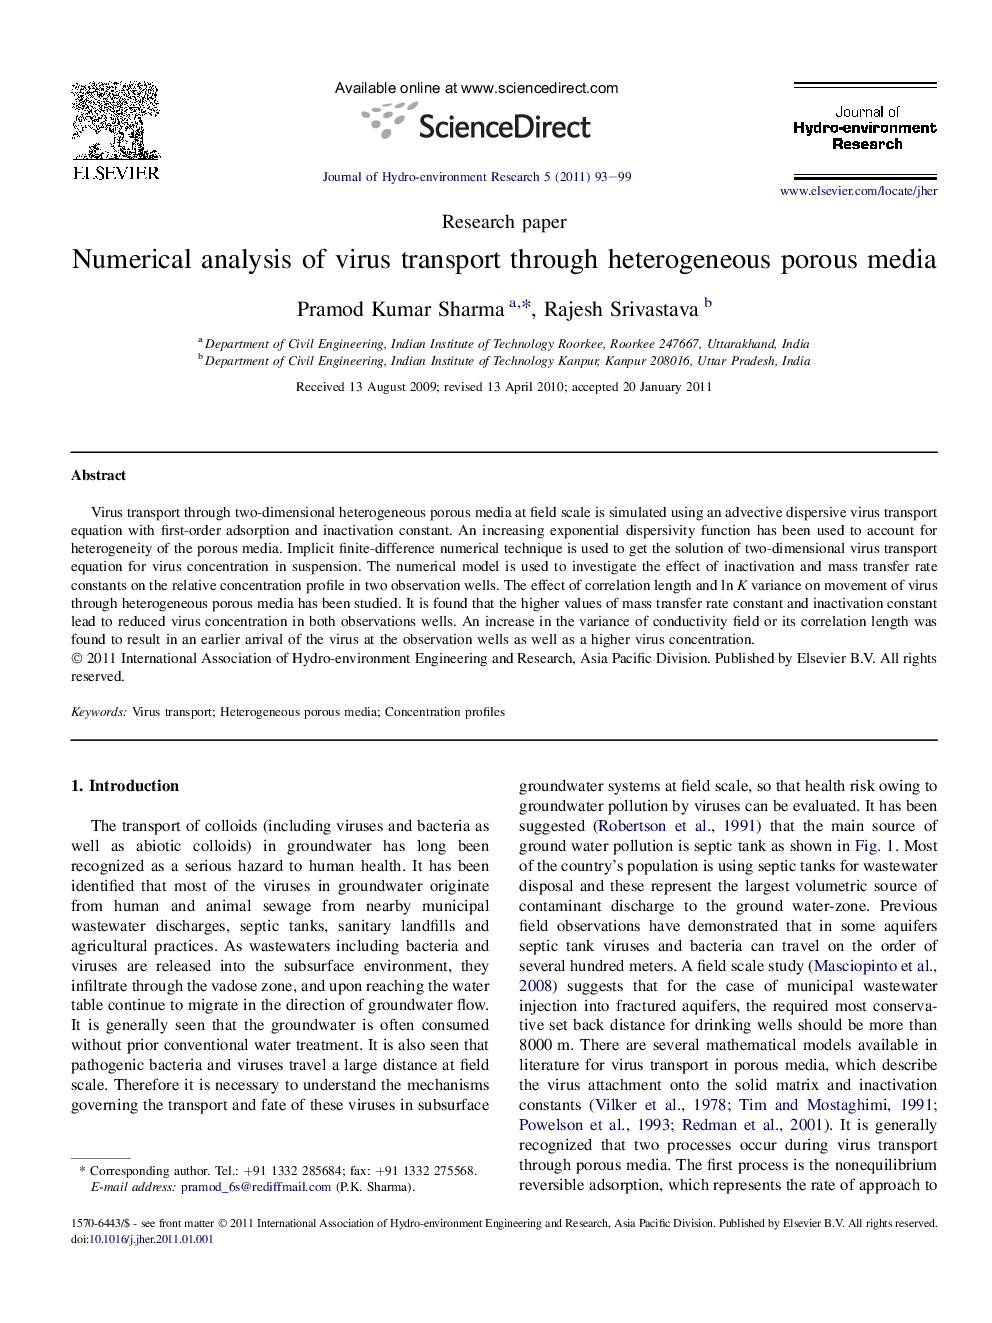 Numerical analysis of virus transport through heterogeneous porous media